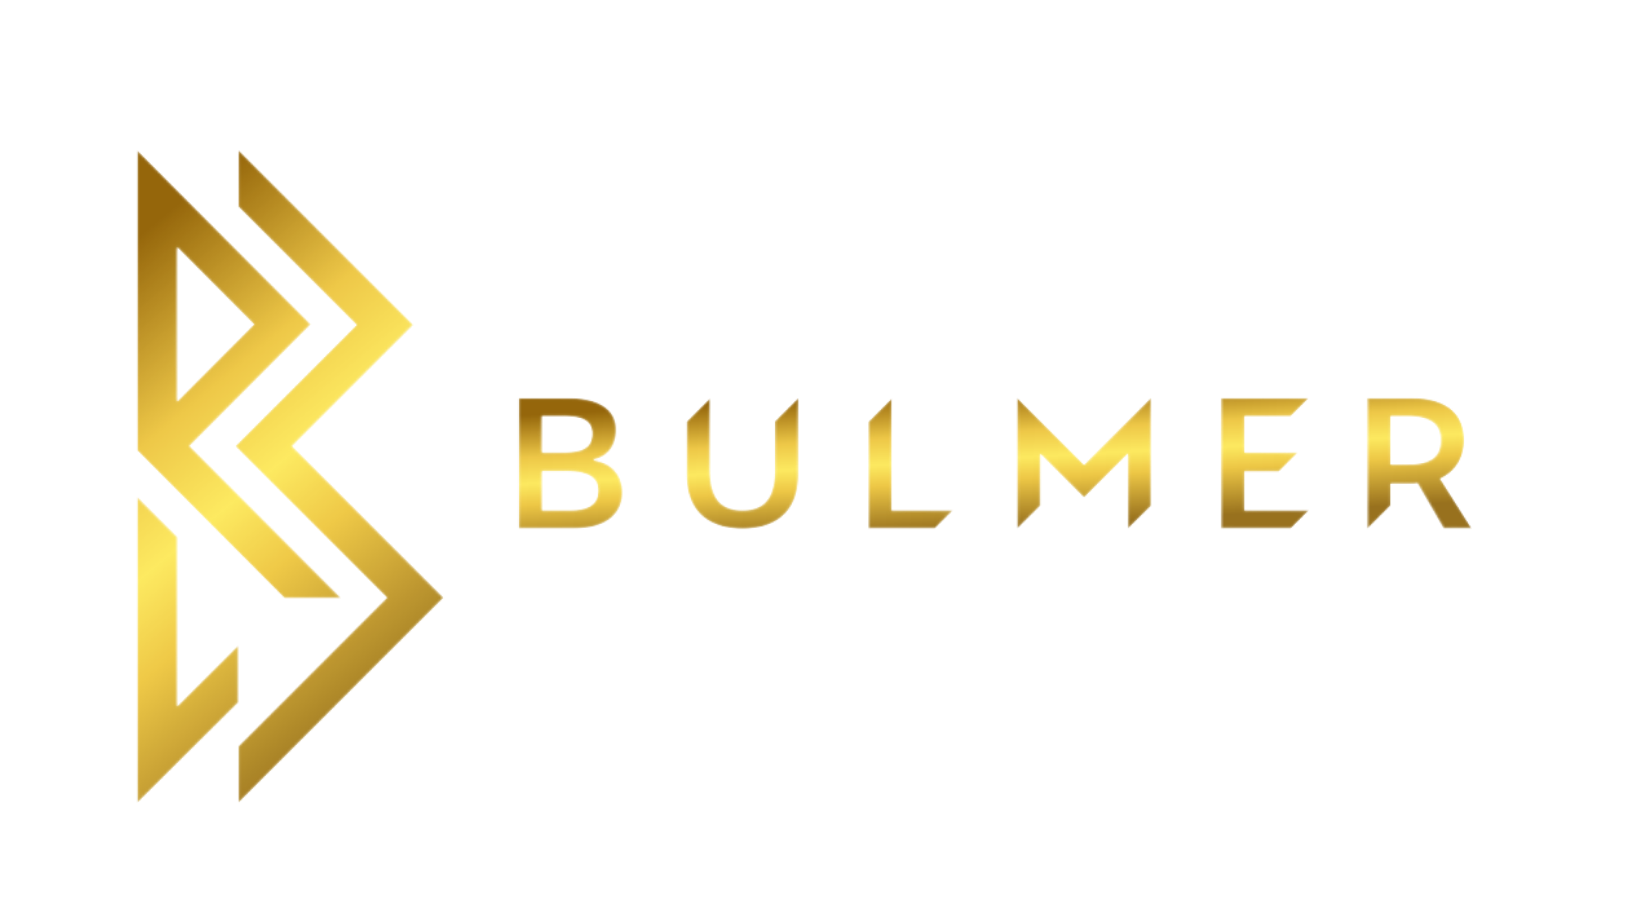 Bulmer - одежда вне времени